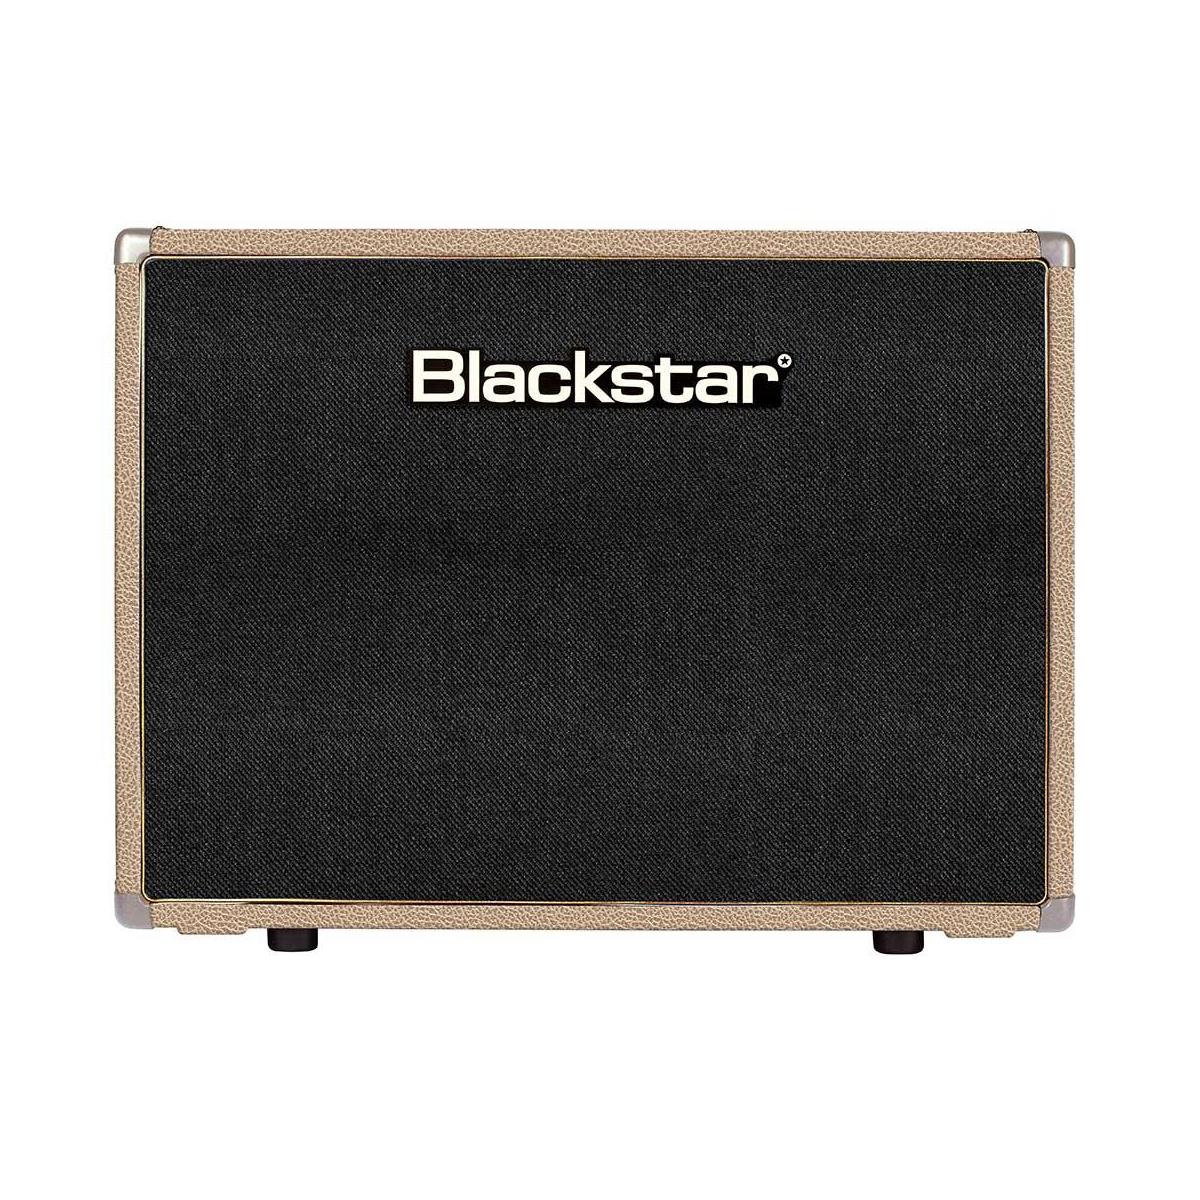 Blackstar HTV-212 2x12" Celestion Guitar Speaker Cabinet - Limited Tan Edition -  HTV212BT